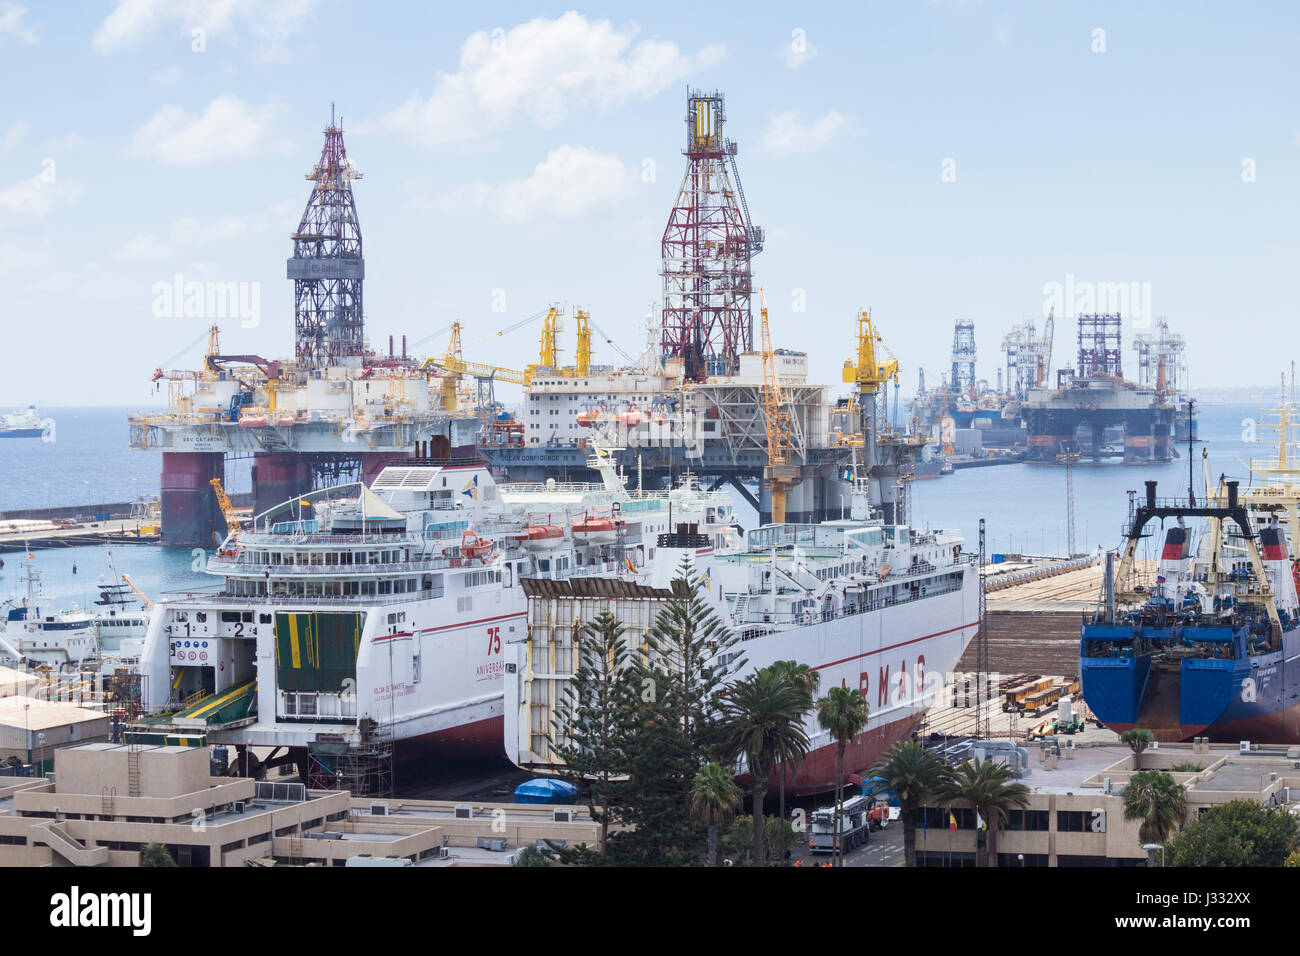 Ships in drydock with mothballed oil rigs in background in Puerto de La Luz in Las Palmas port. Gran Canaria, Canary Islands, Spain Stock Photo